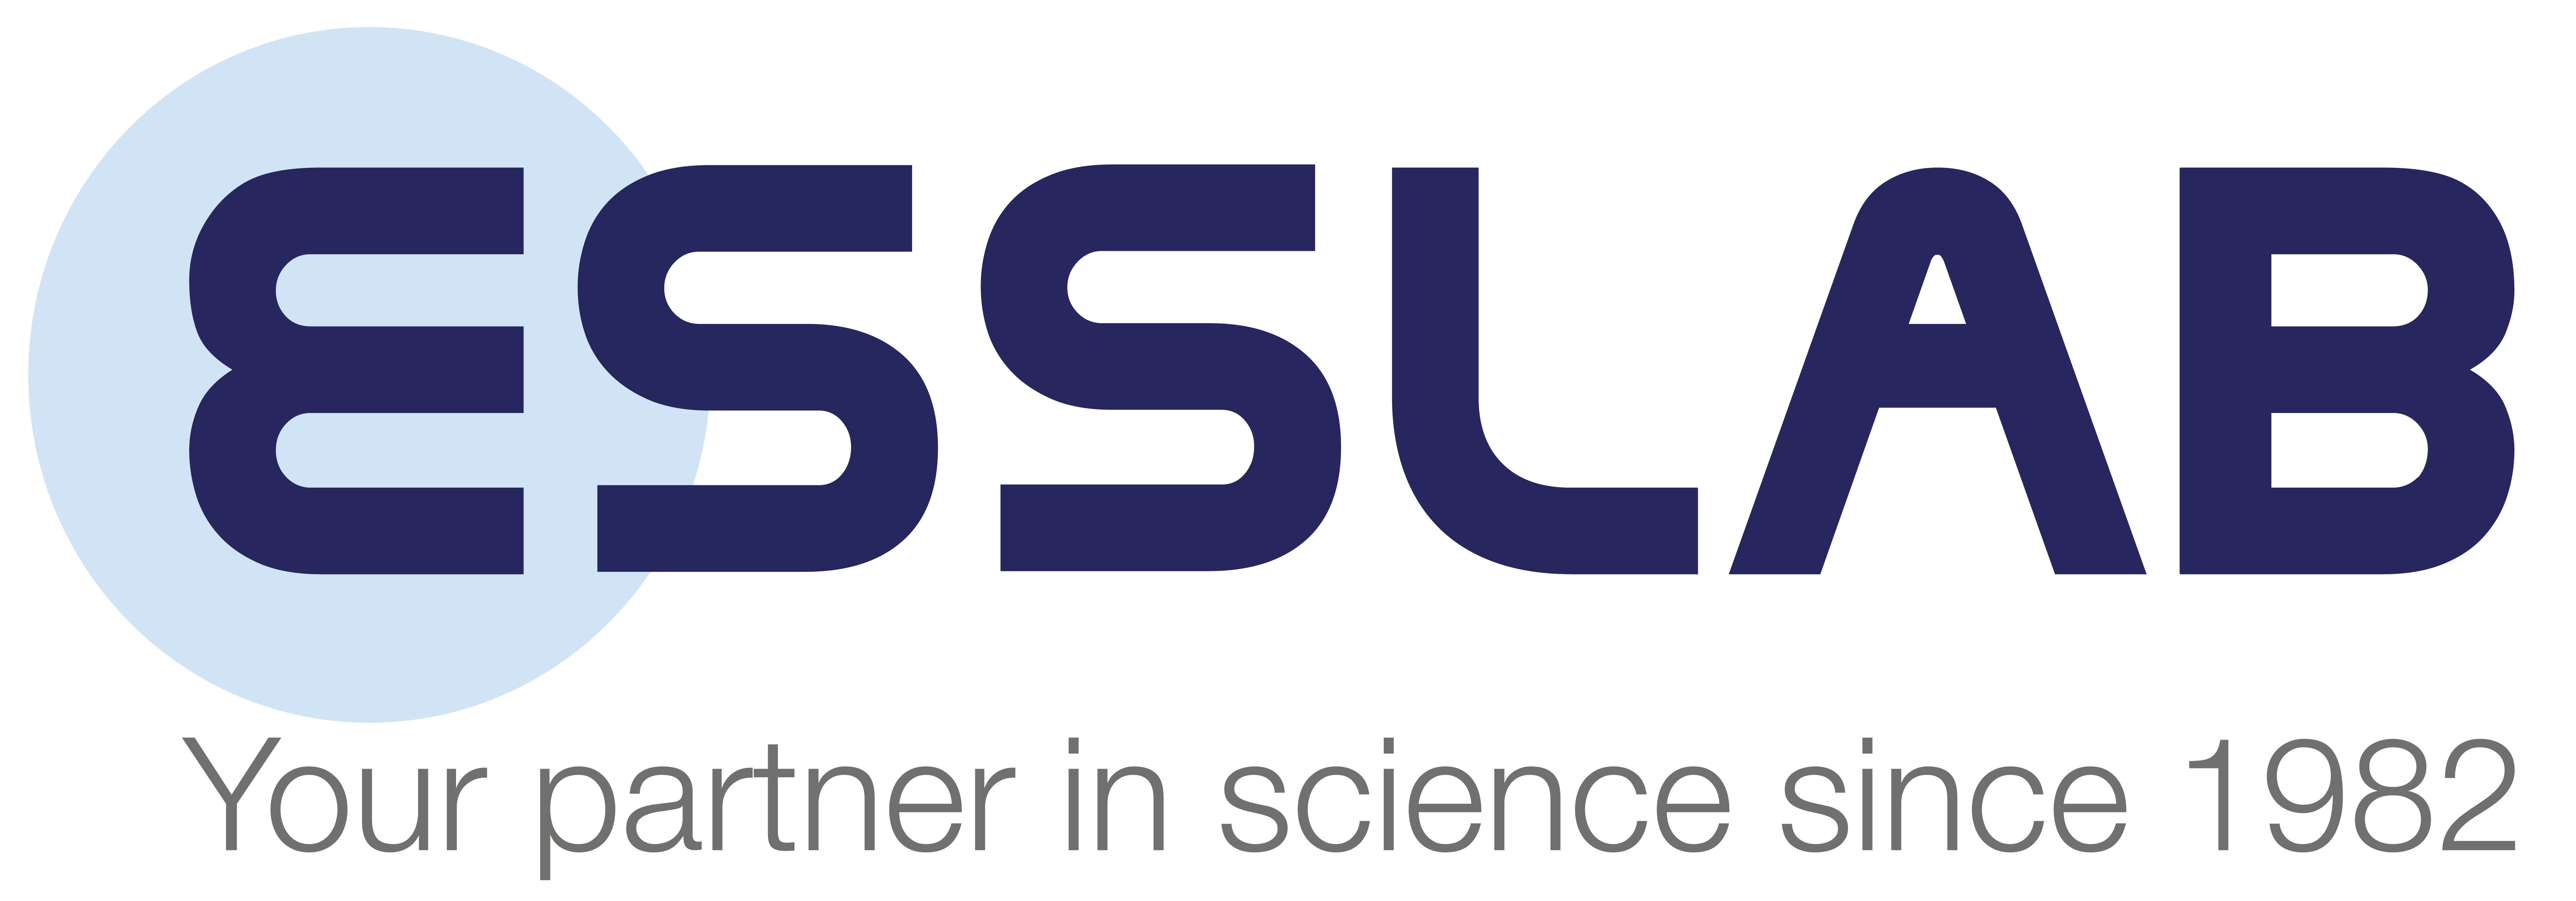 Essex Scientific Laboratory Supplies Ltd